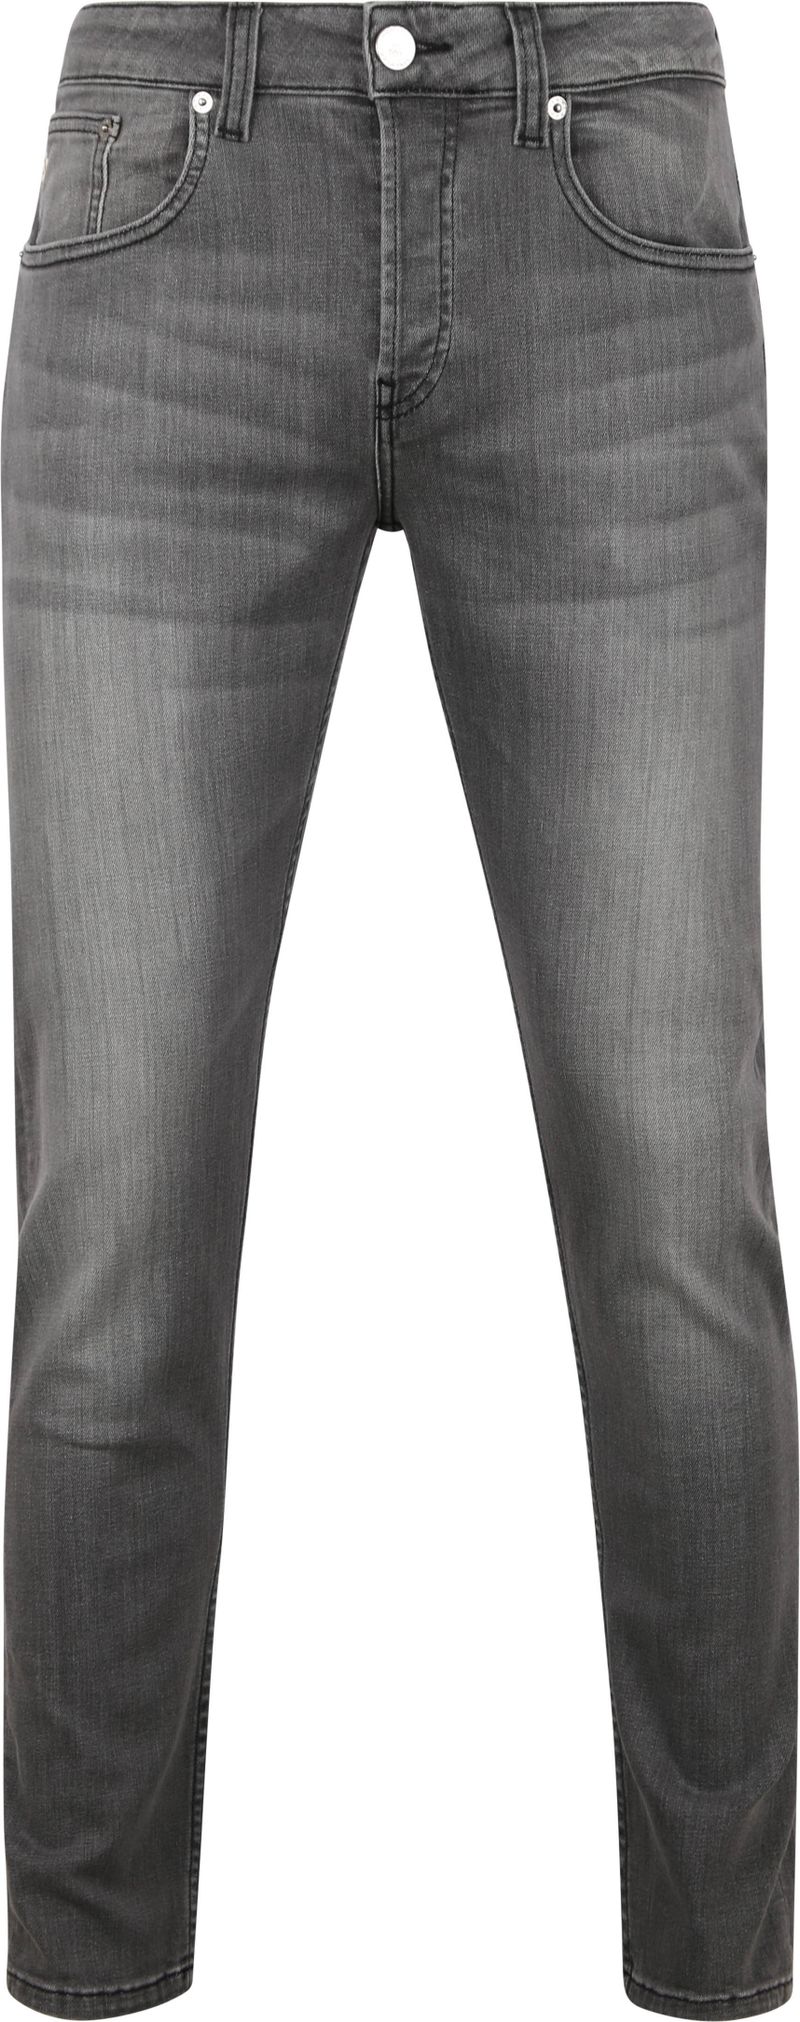 MUD Jeans Denim Slim-Fit Grau - Größe W 33 - L 32 von MUD Jeans